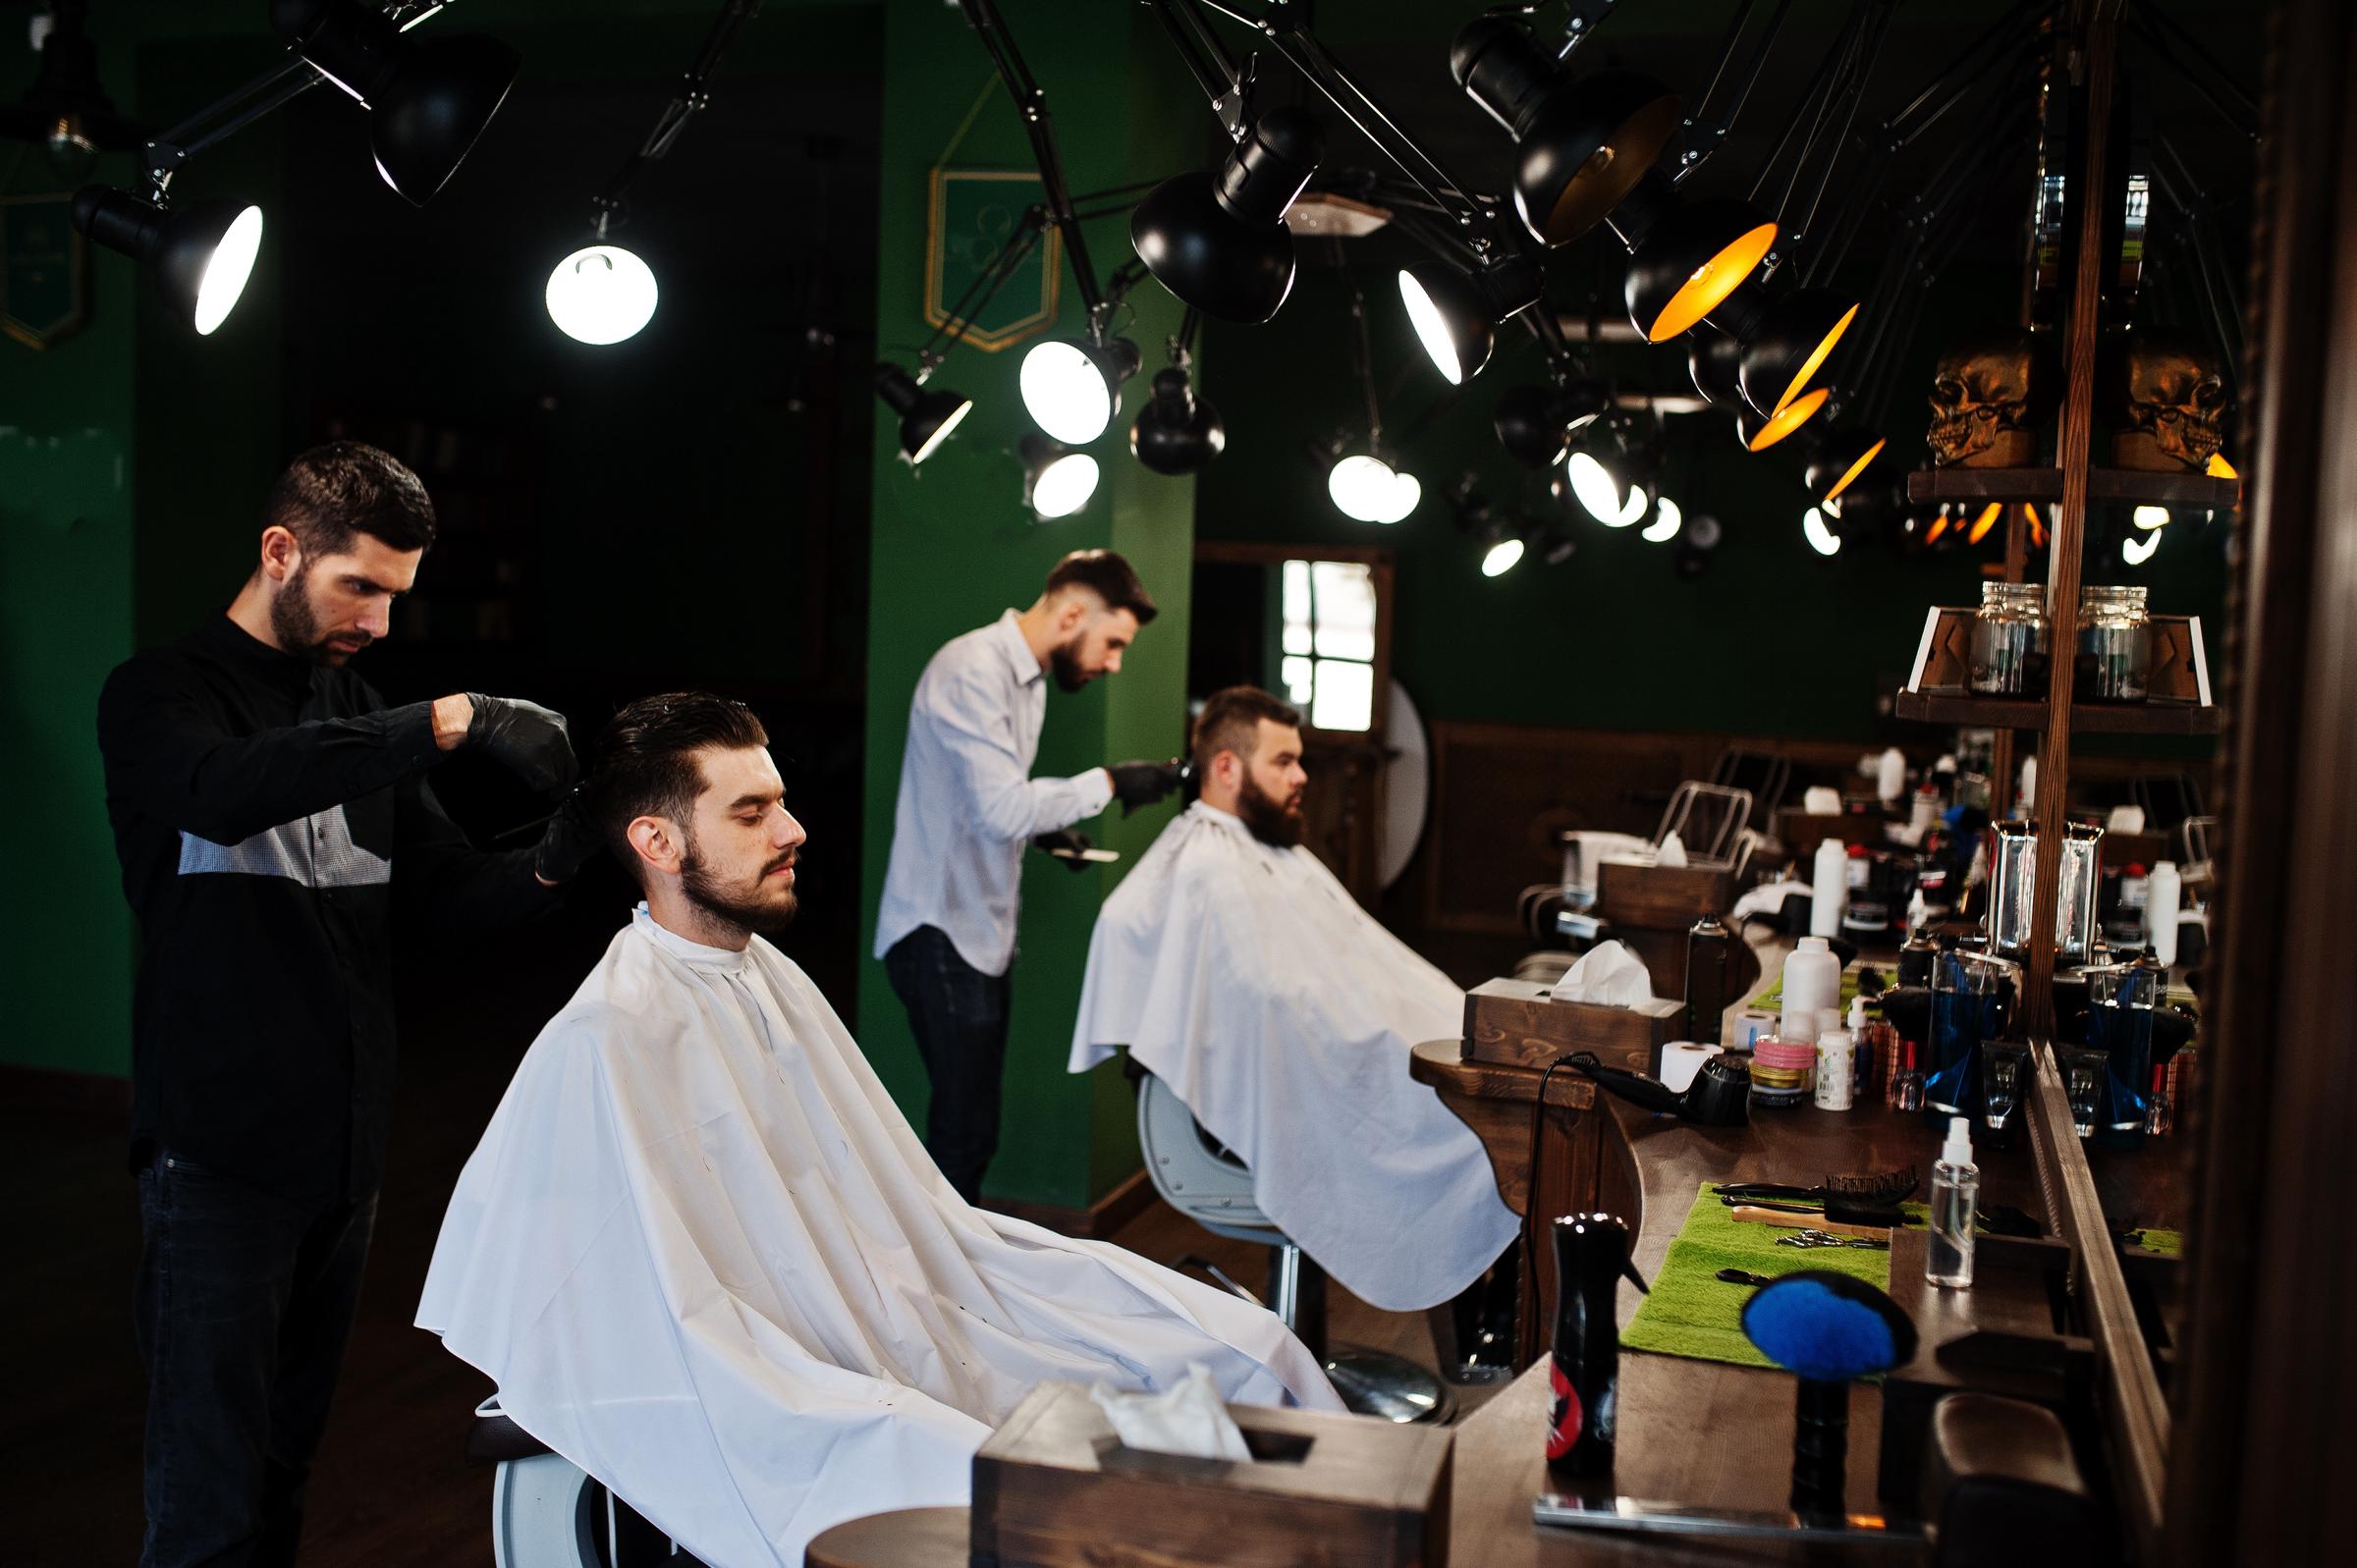 Inside a barbershop | Source: Freepik